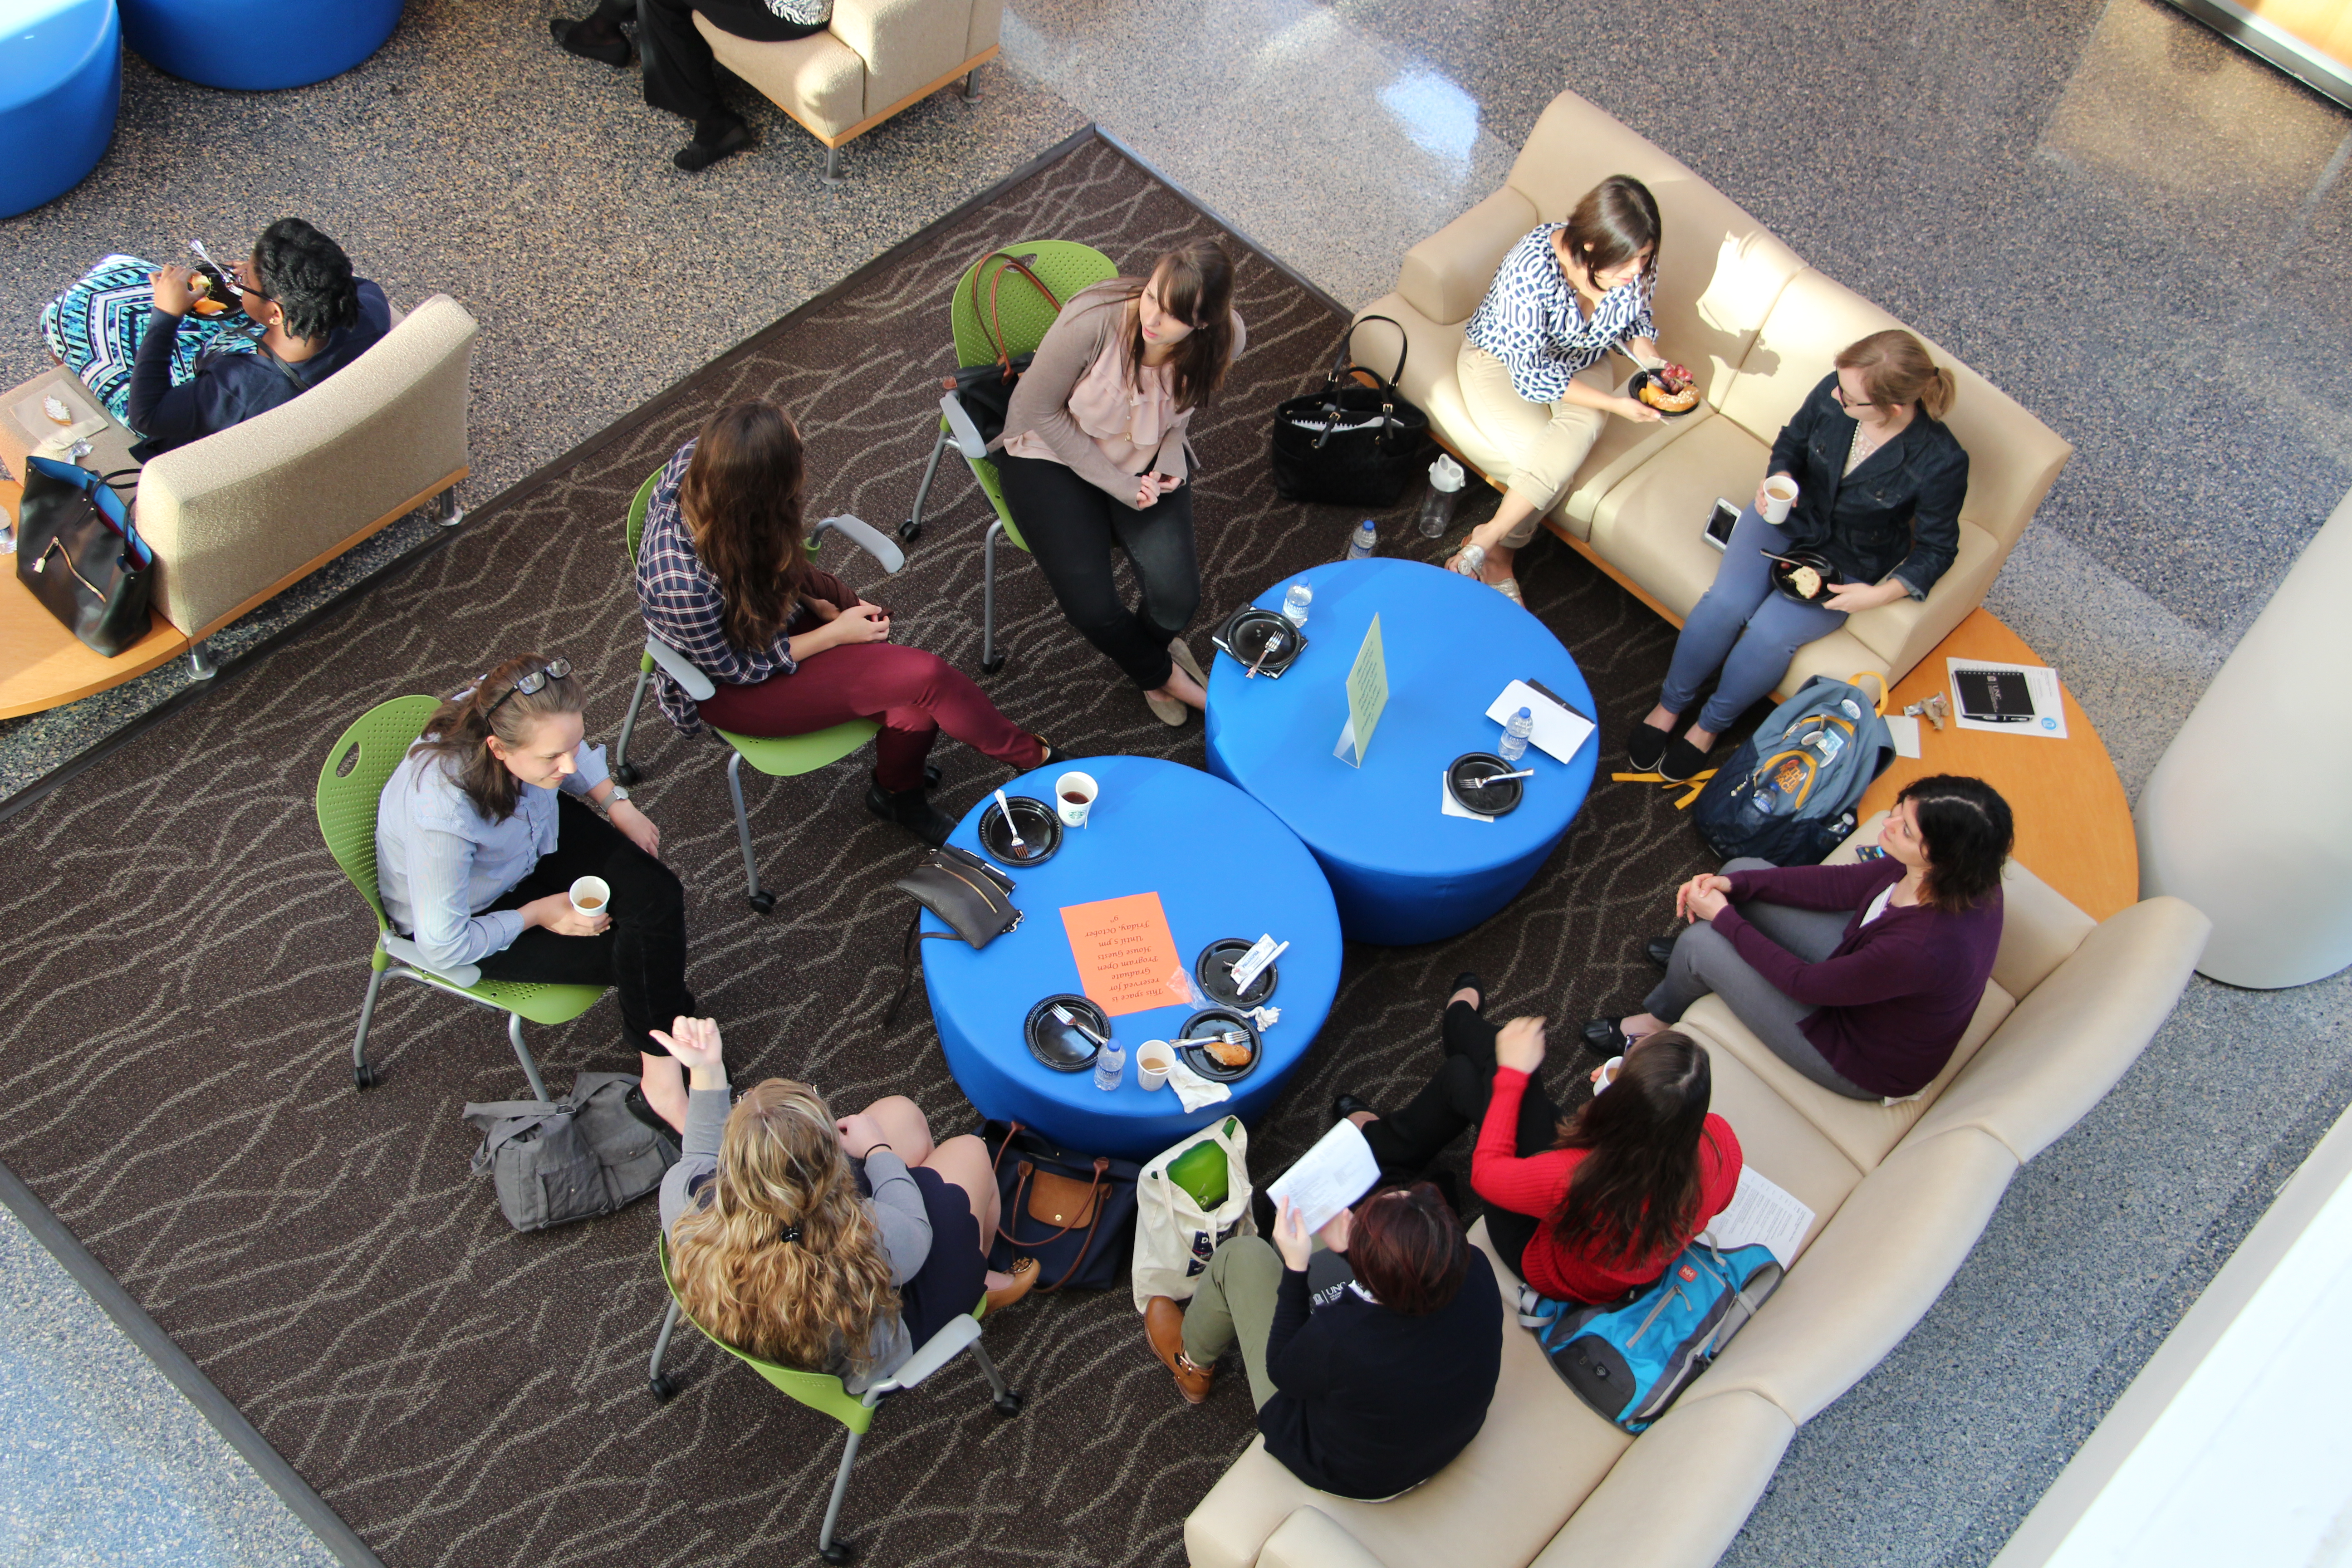 Armfield Atrium encourages academic collaboration with flexible furniture arrangements.